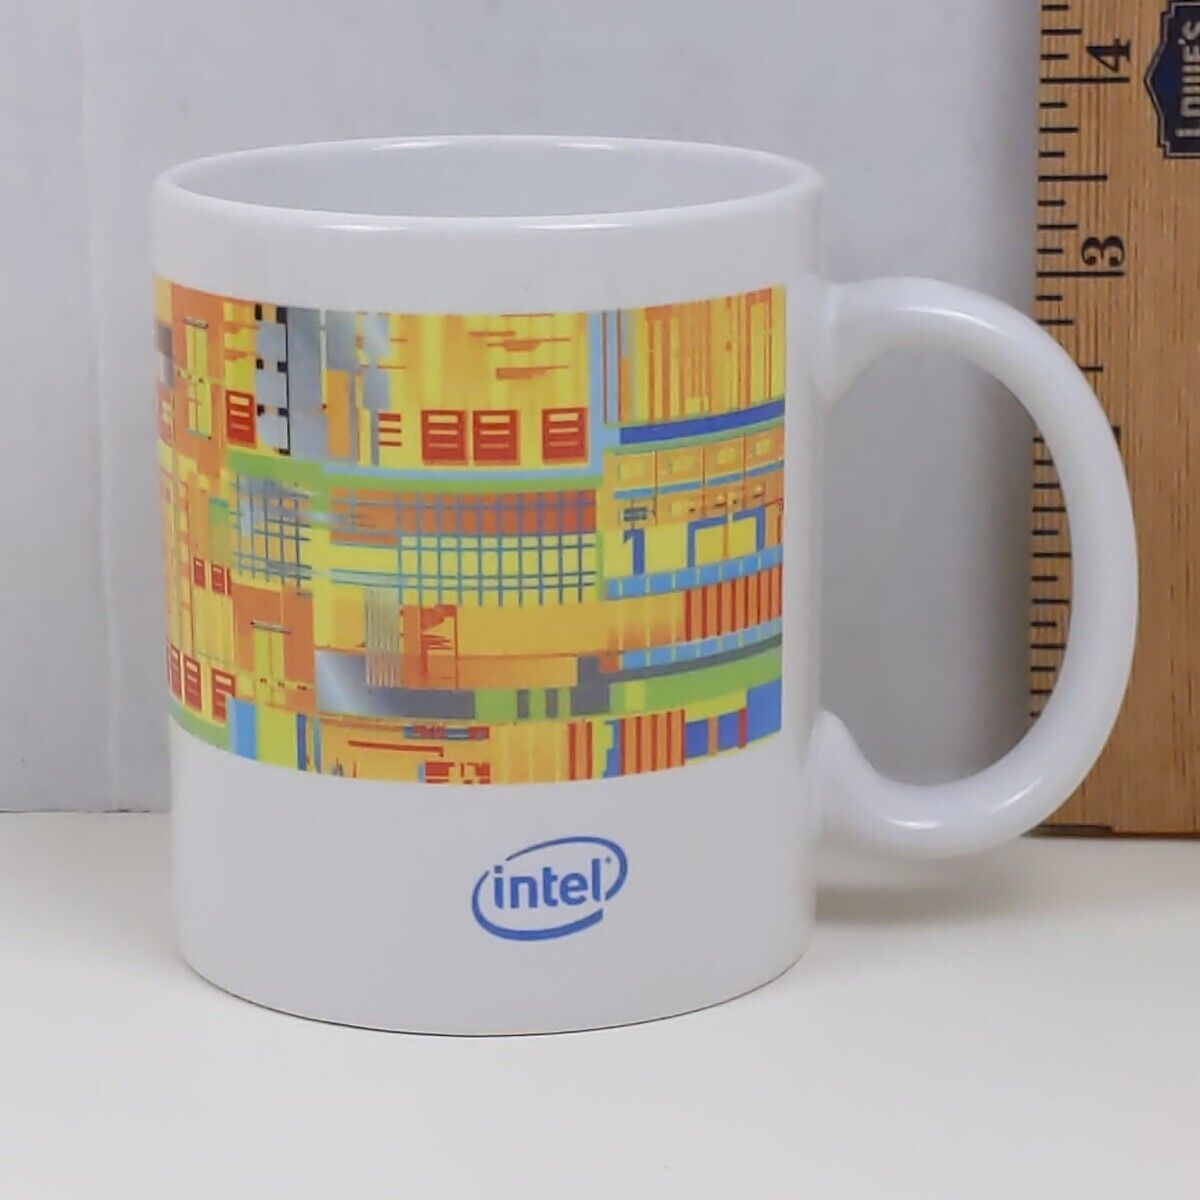 Vintage Intel Computer Mug Coffee Microprocessor CPU Technology Silicon Valley